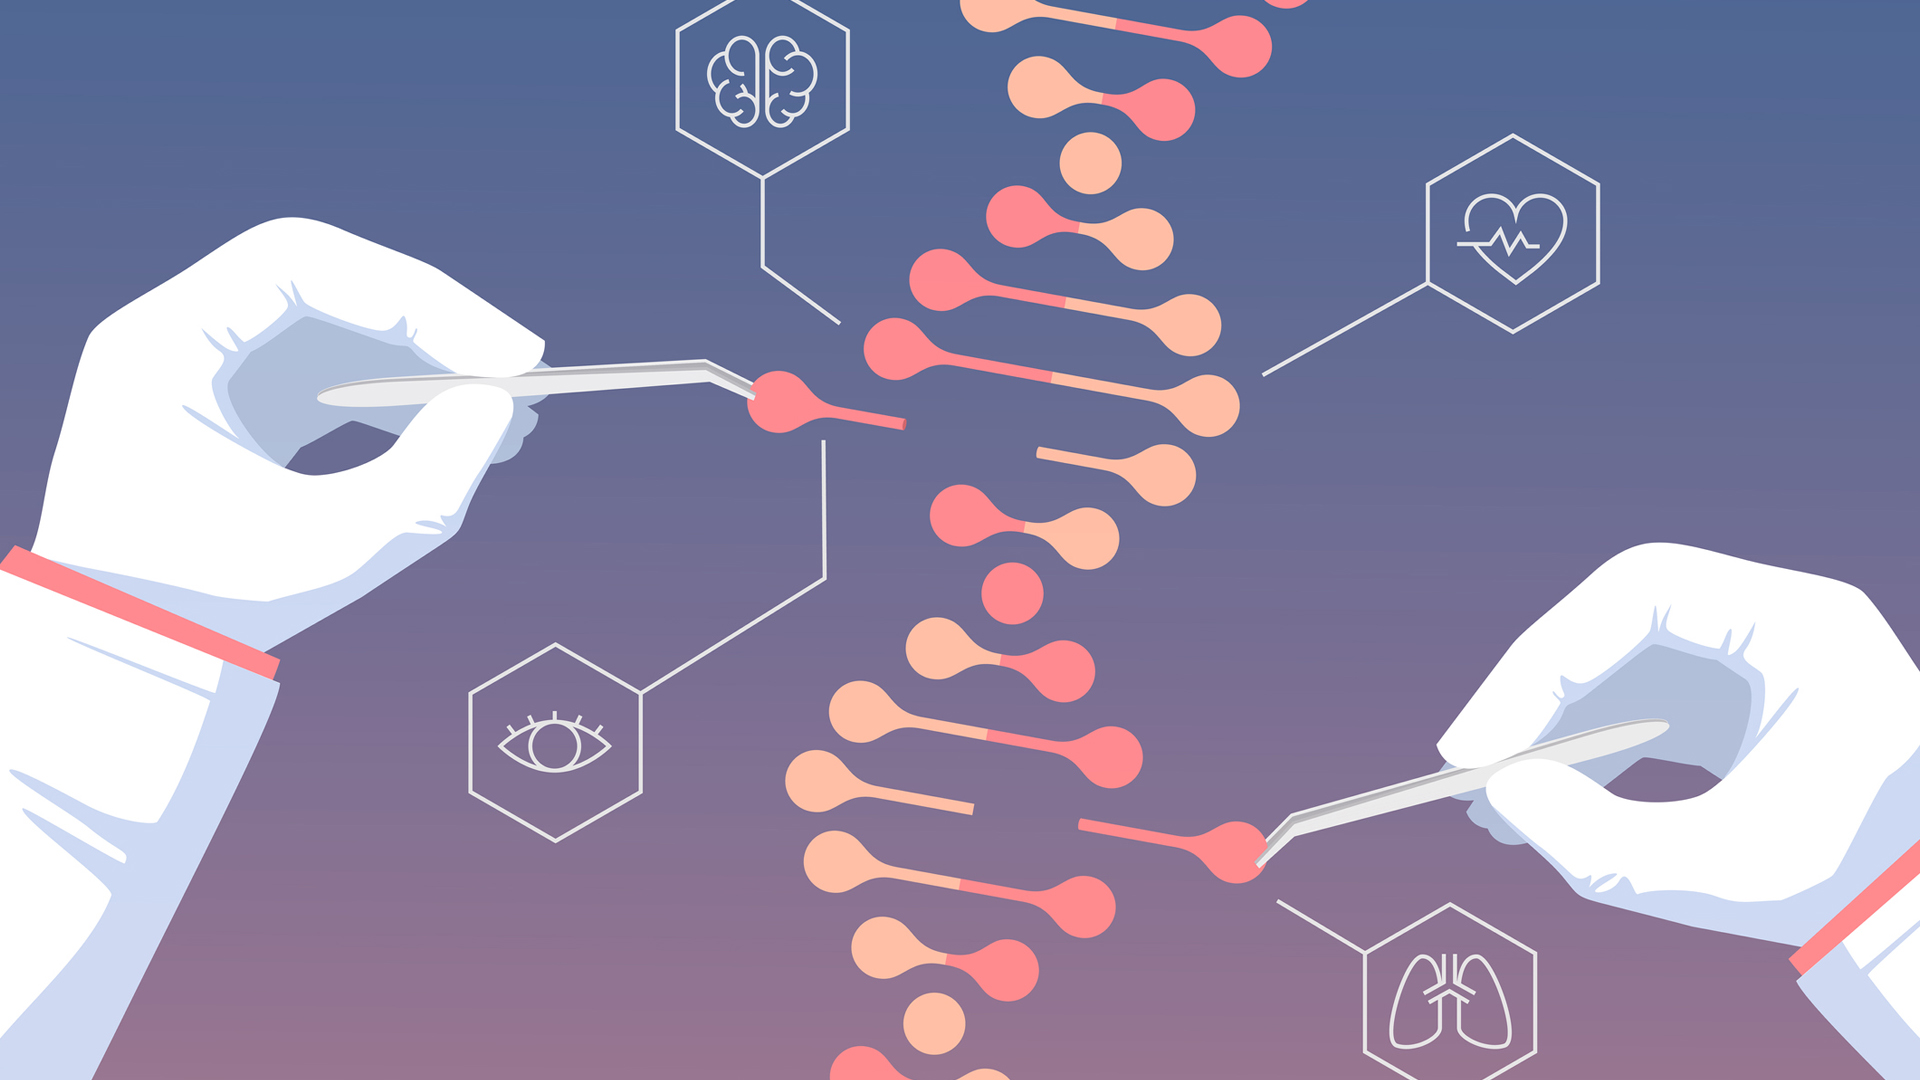 Novel CRISPR tool allows unprecedented control of epigenetic inheritance